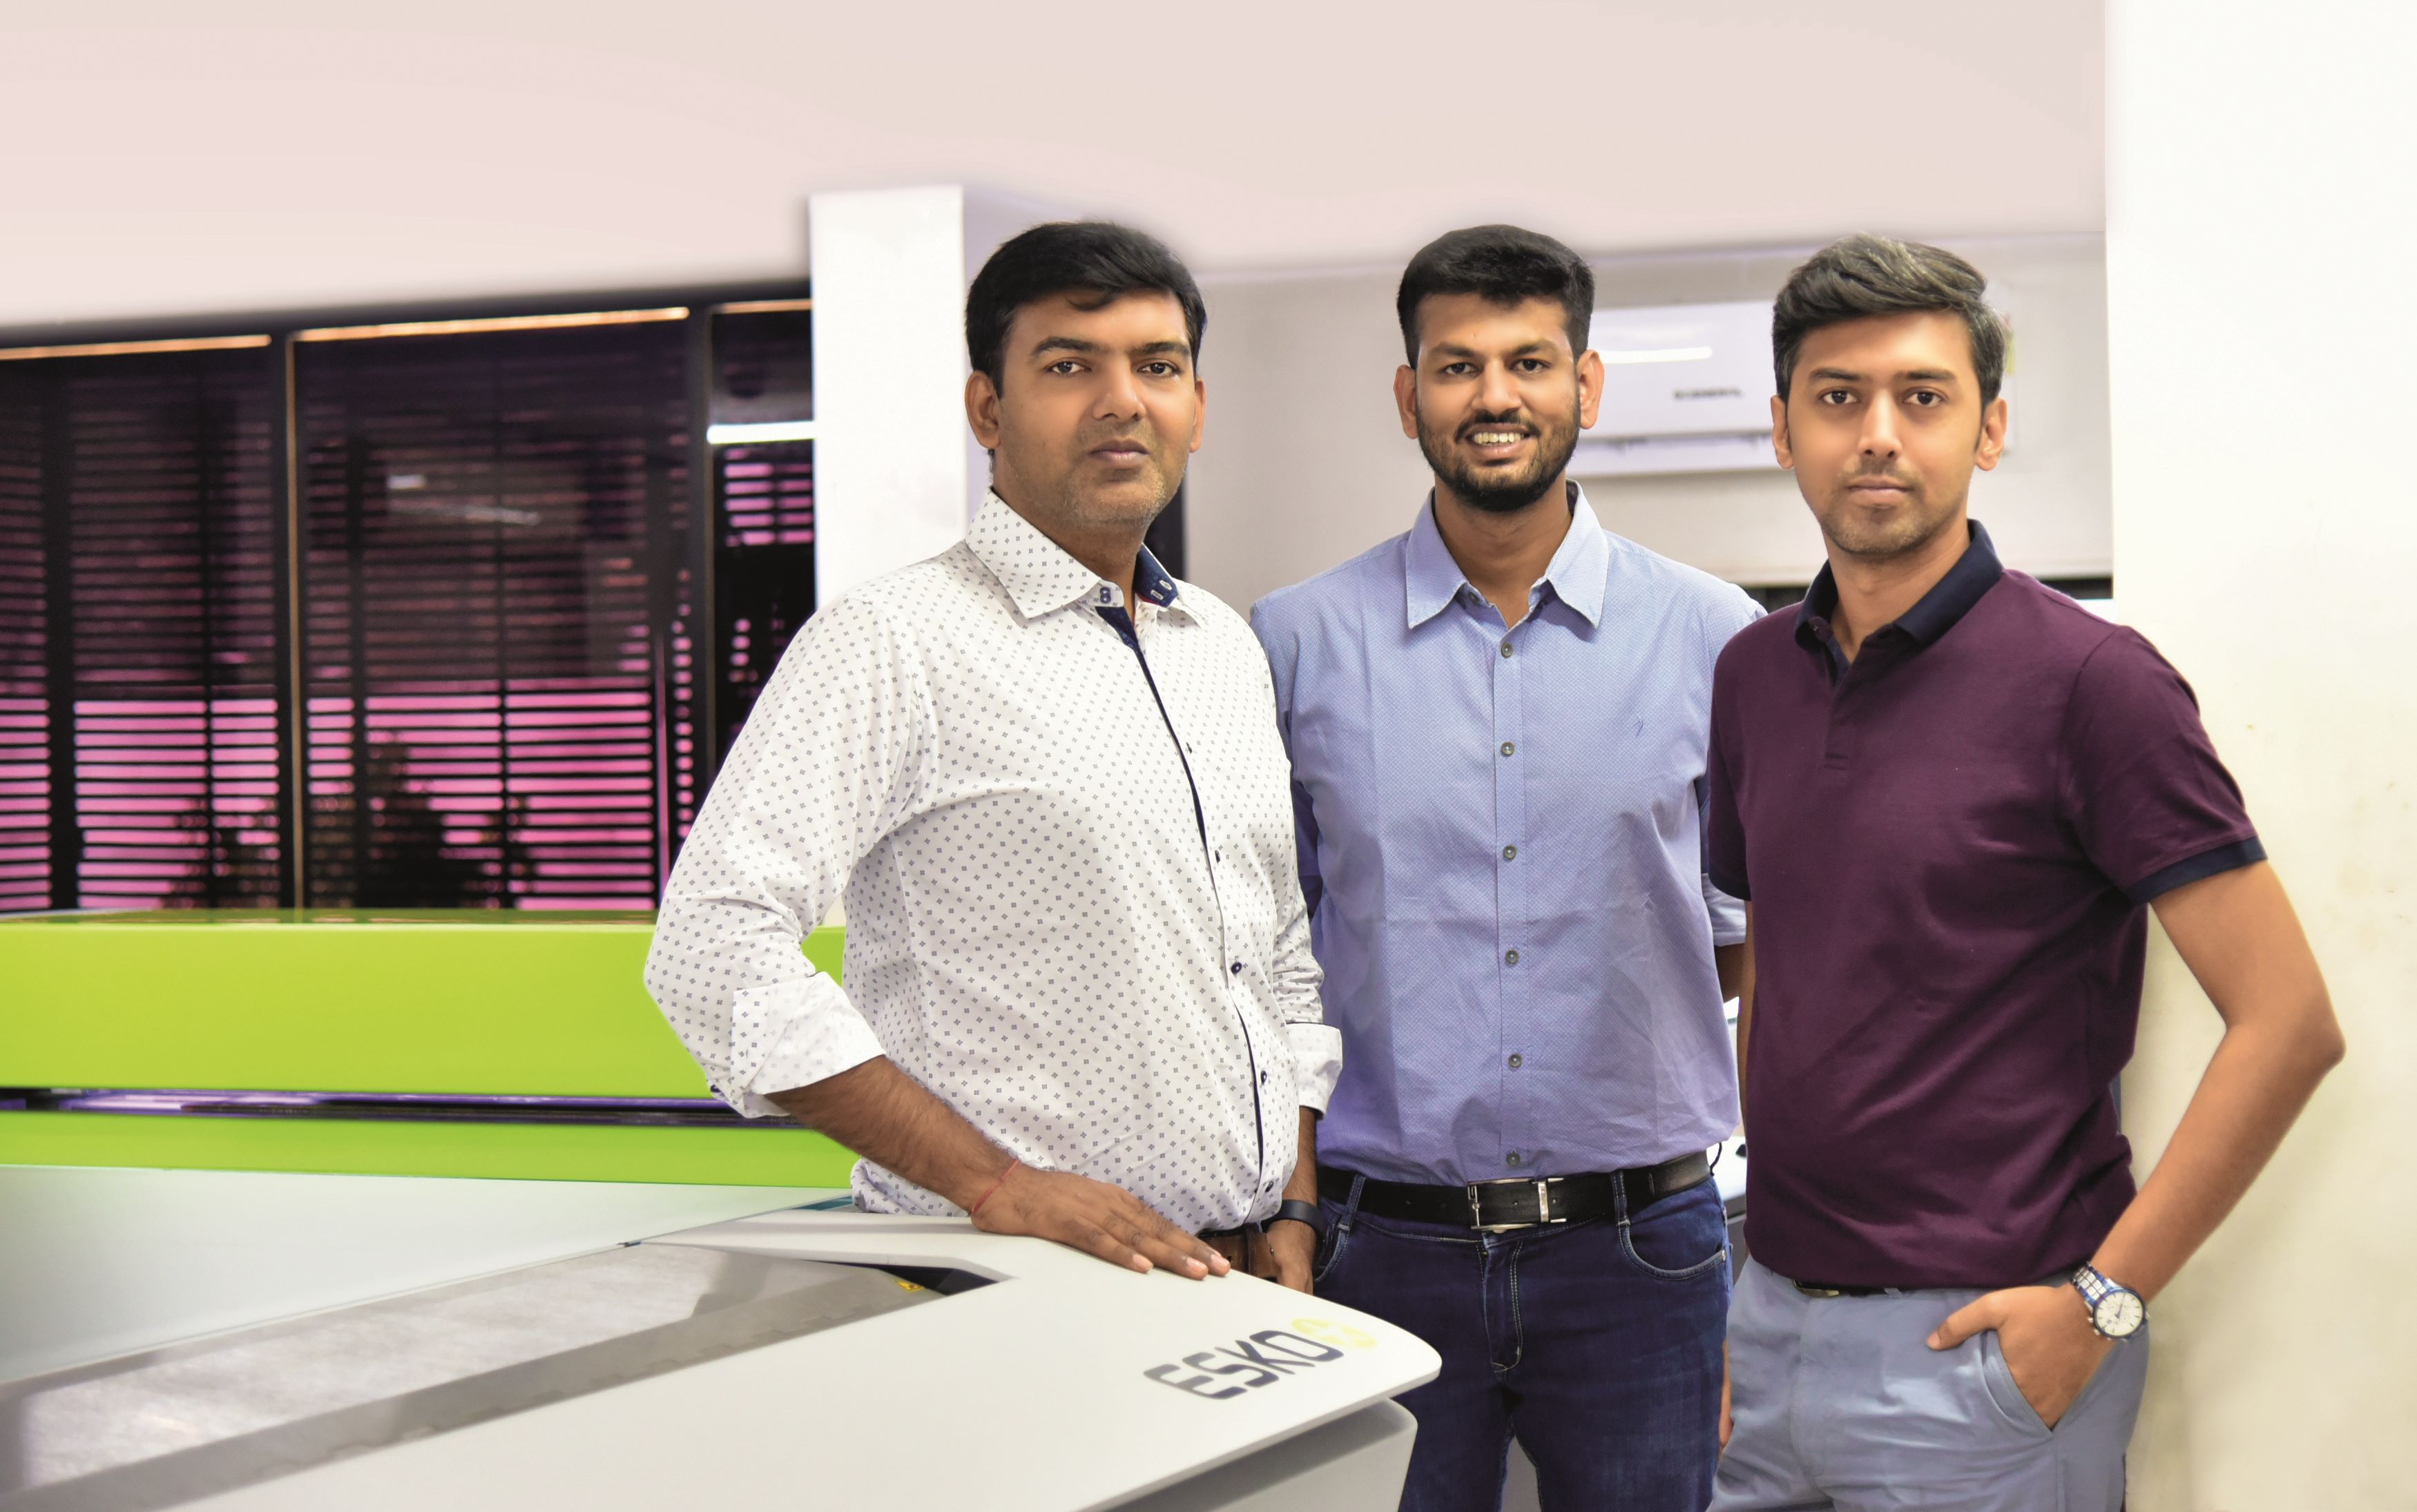 Rutul Zaveri, Urjit Zaveri and Shrutul Zaveri, brothers and Directors of Pin Point Block